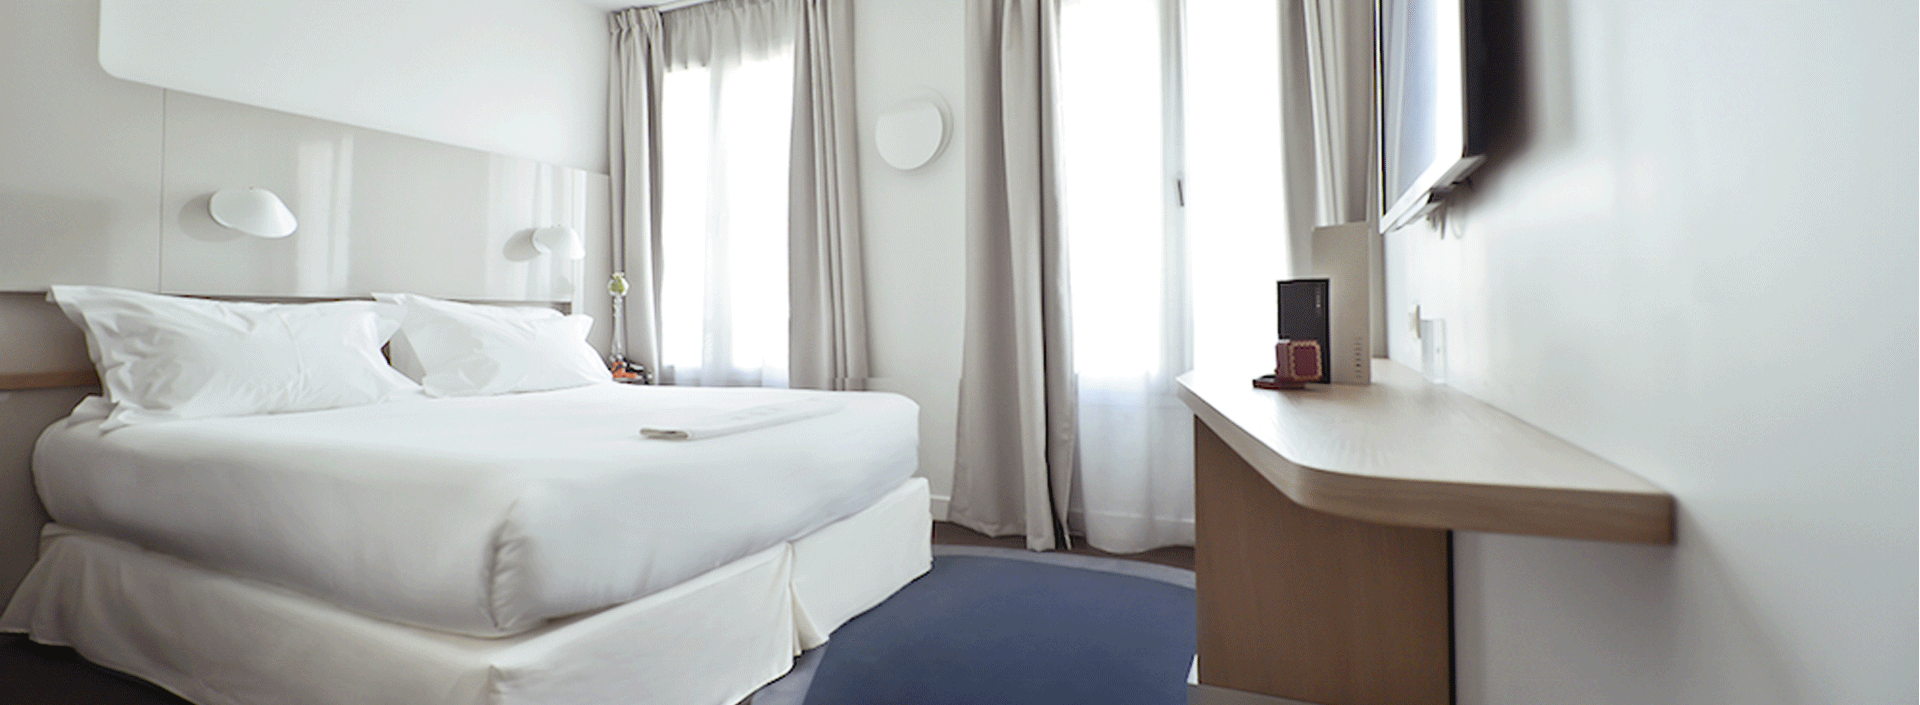 01-Hotel-le-Marcel-Hotelsforday